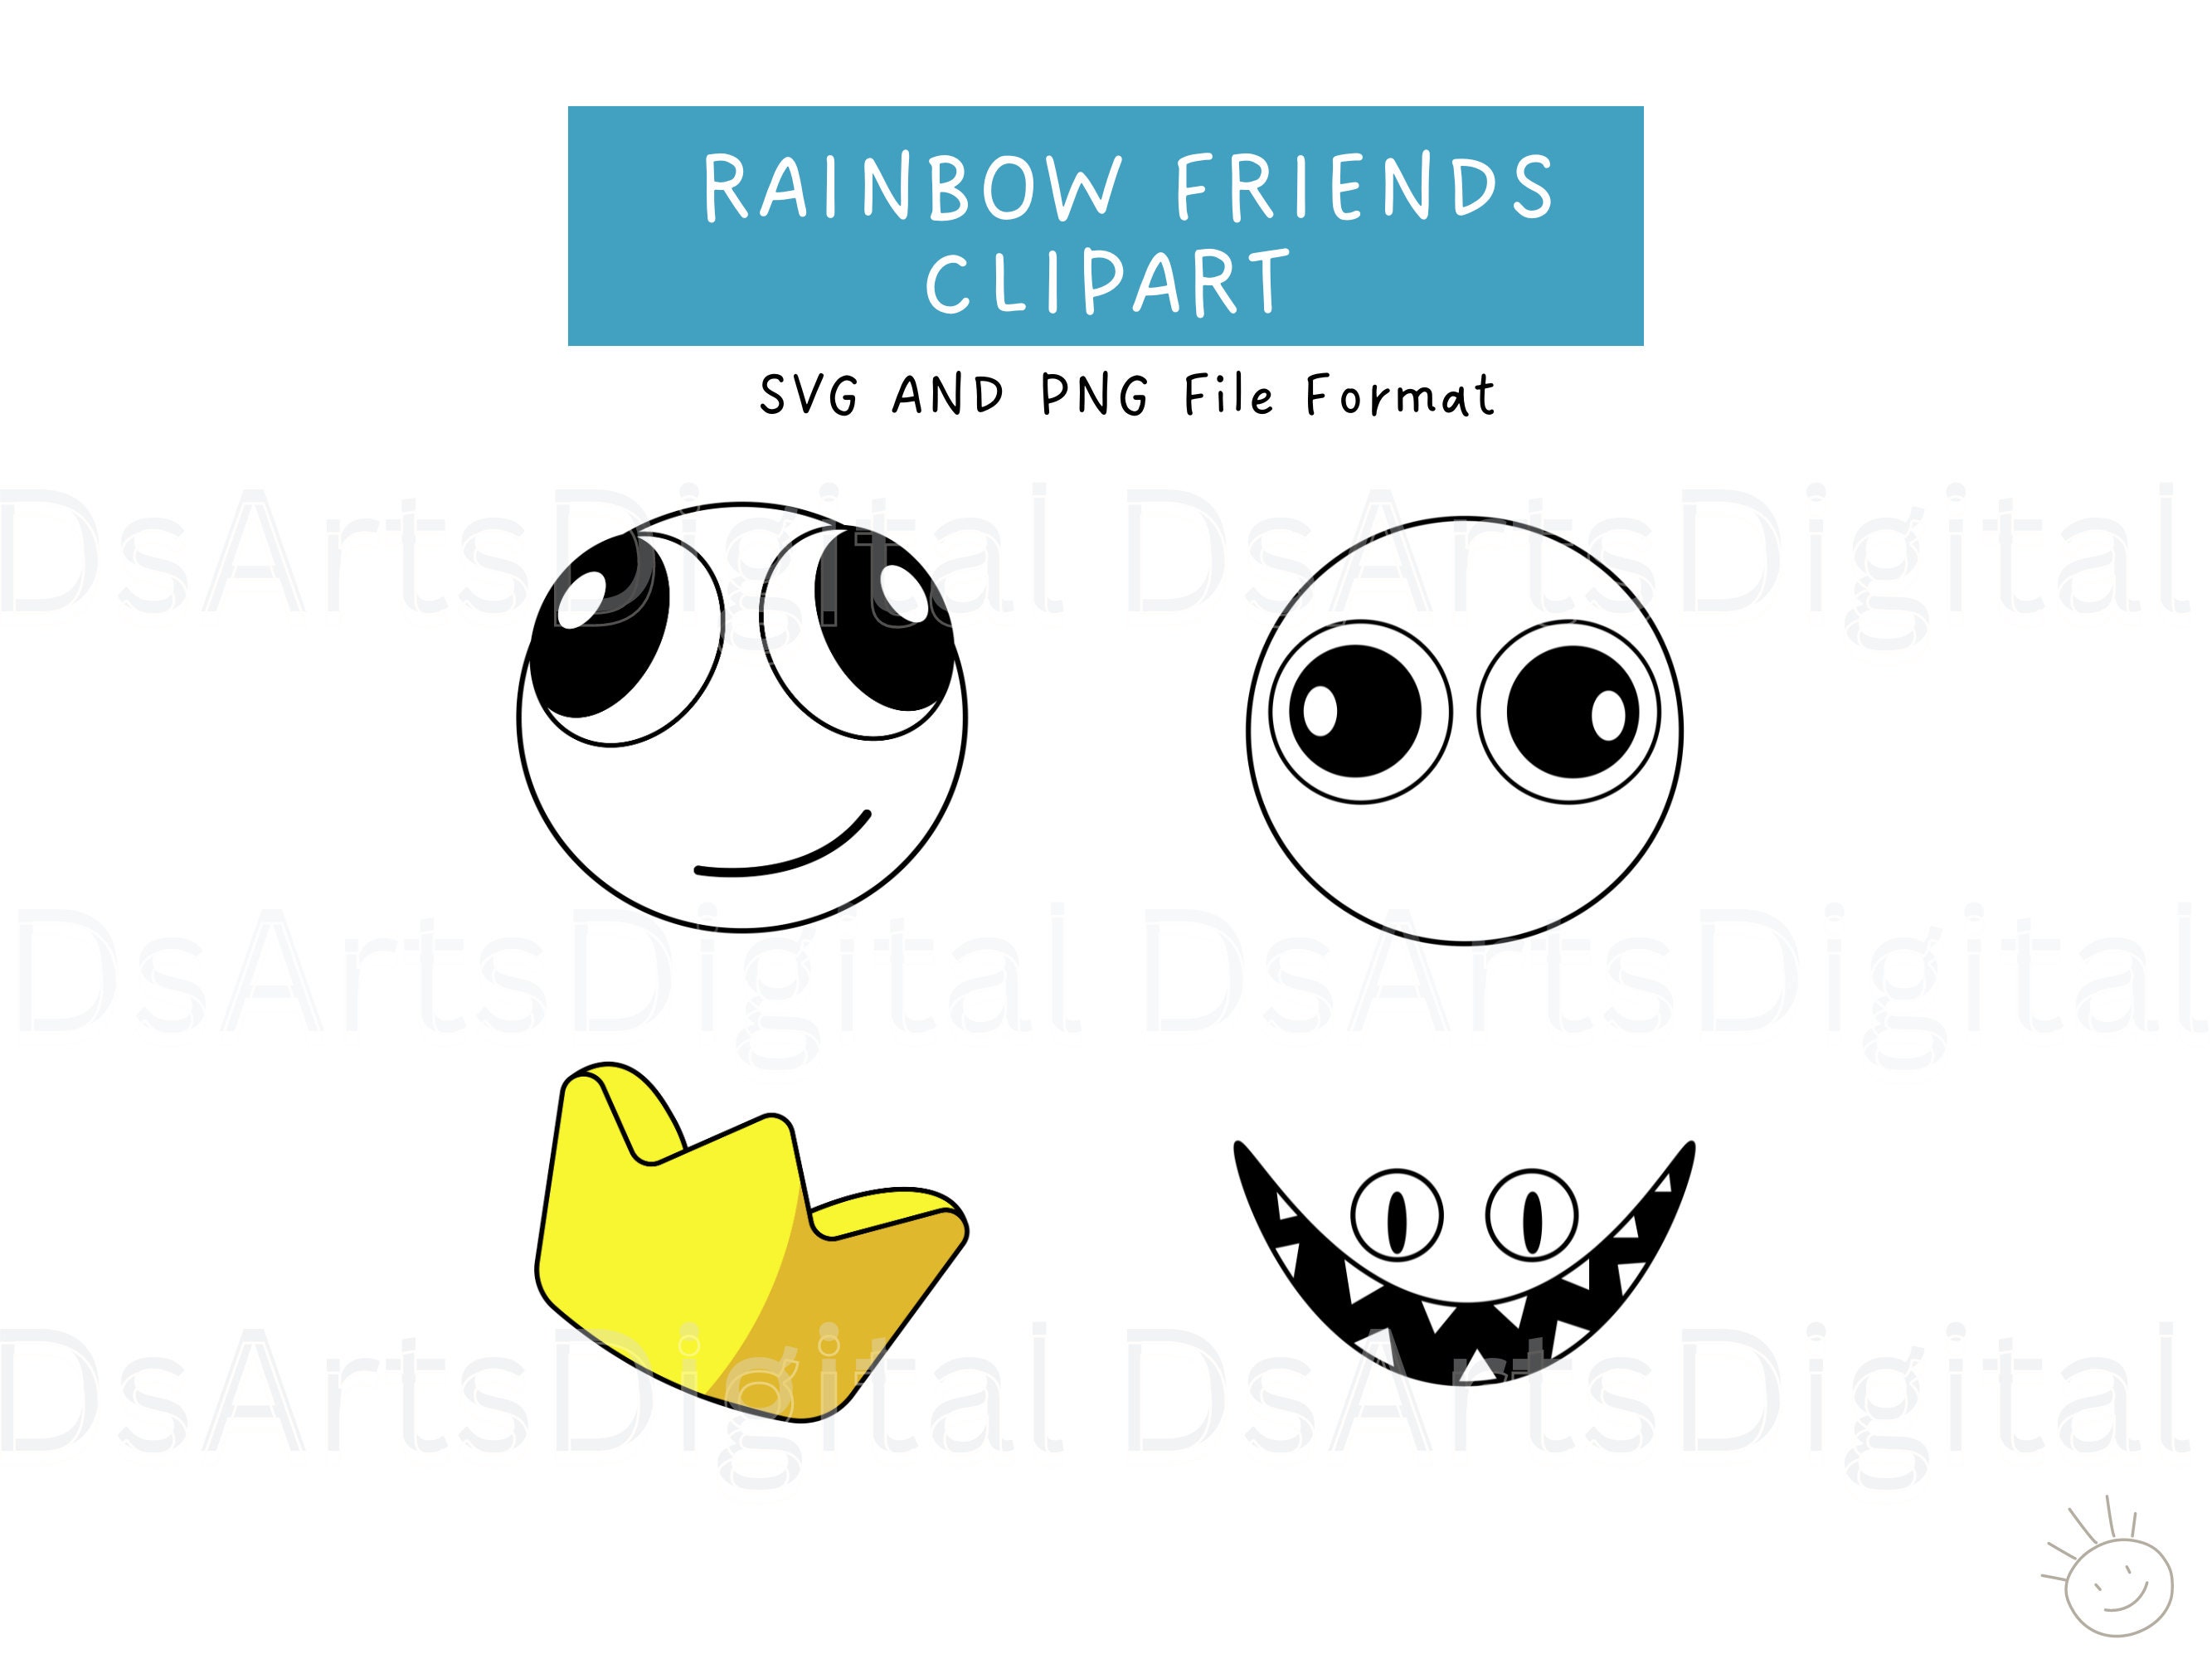 Rainbow Friends logo SVG, Rainbow Friends Roblox All Charact